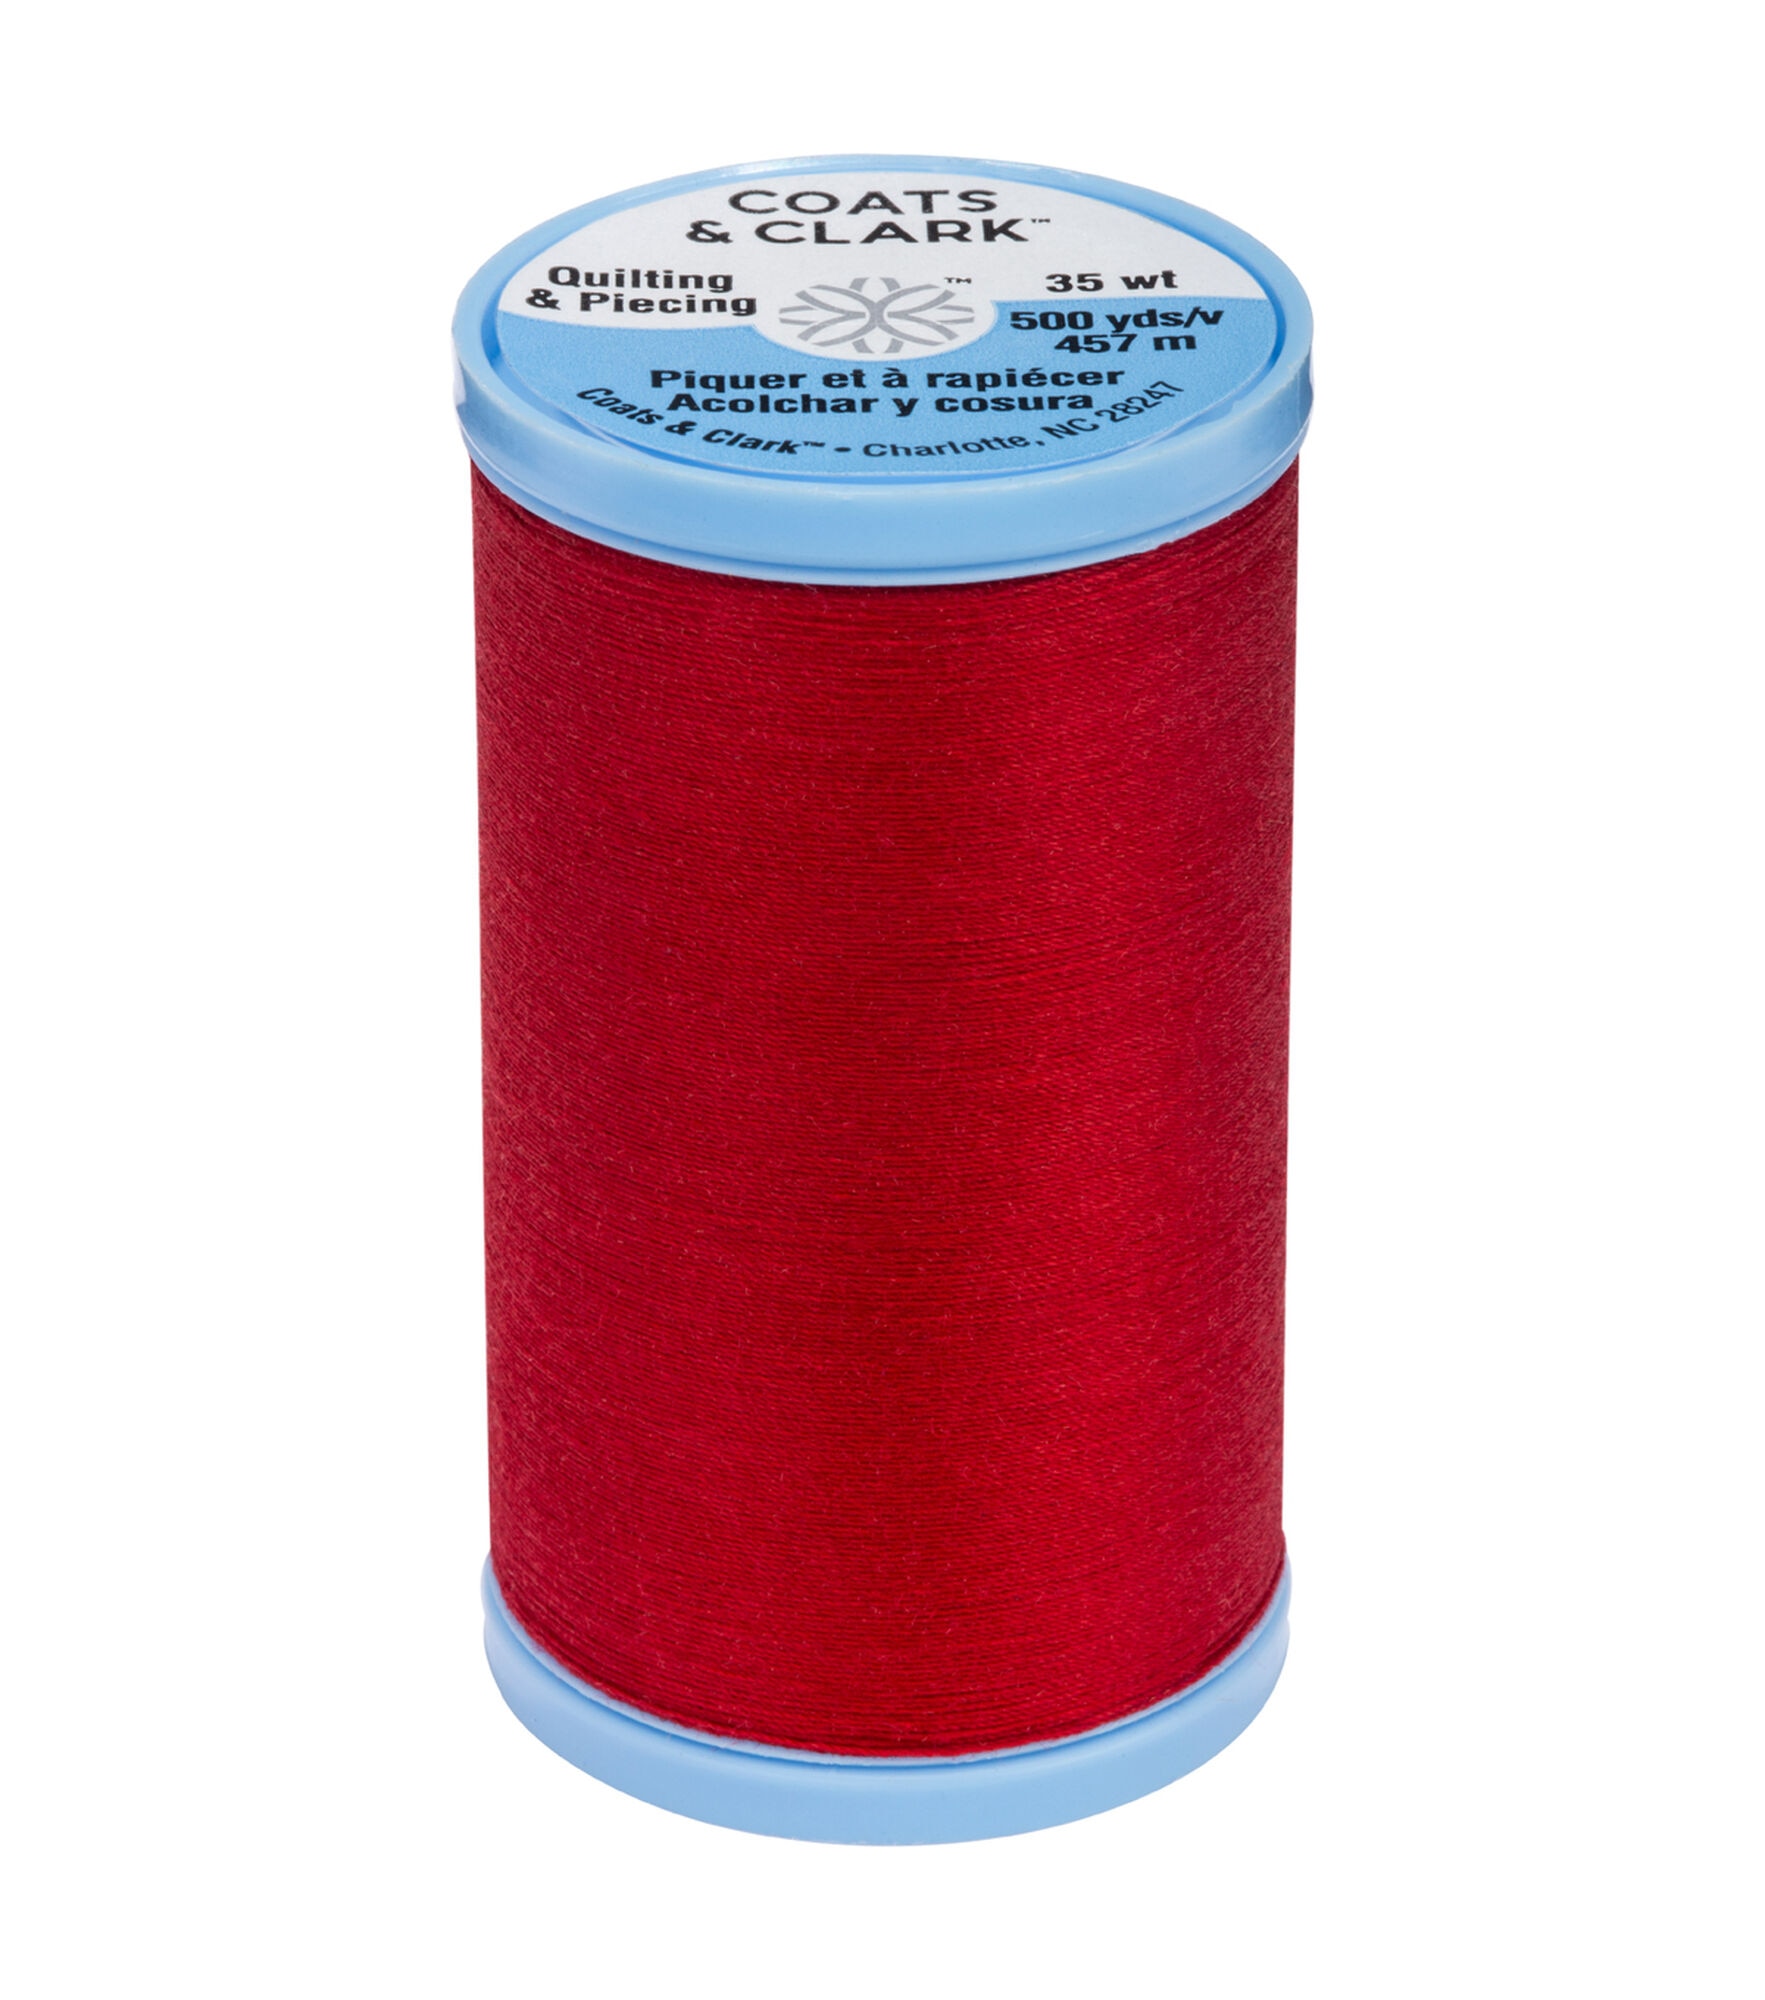 Coats & Clark Quilting Piecing Thread, Coats Quilting Piecing Red, hi-res